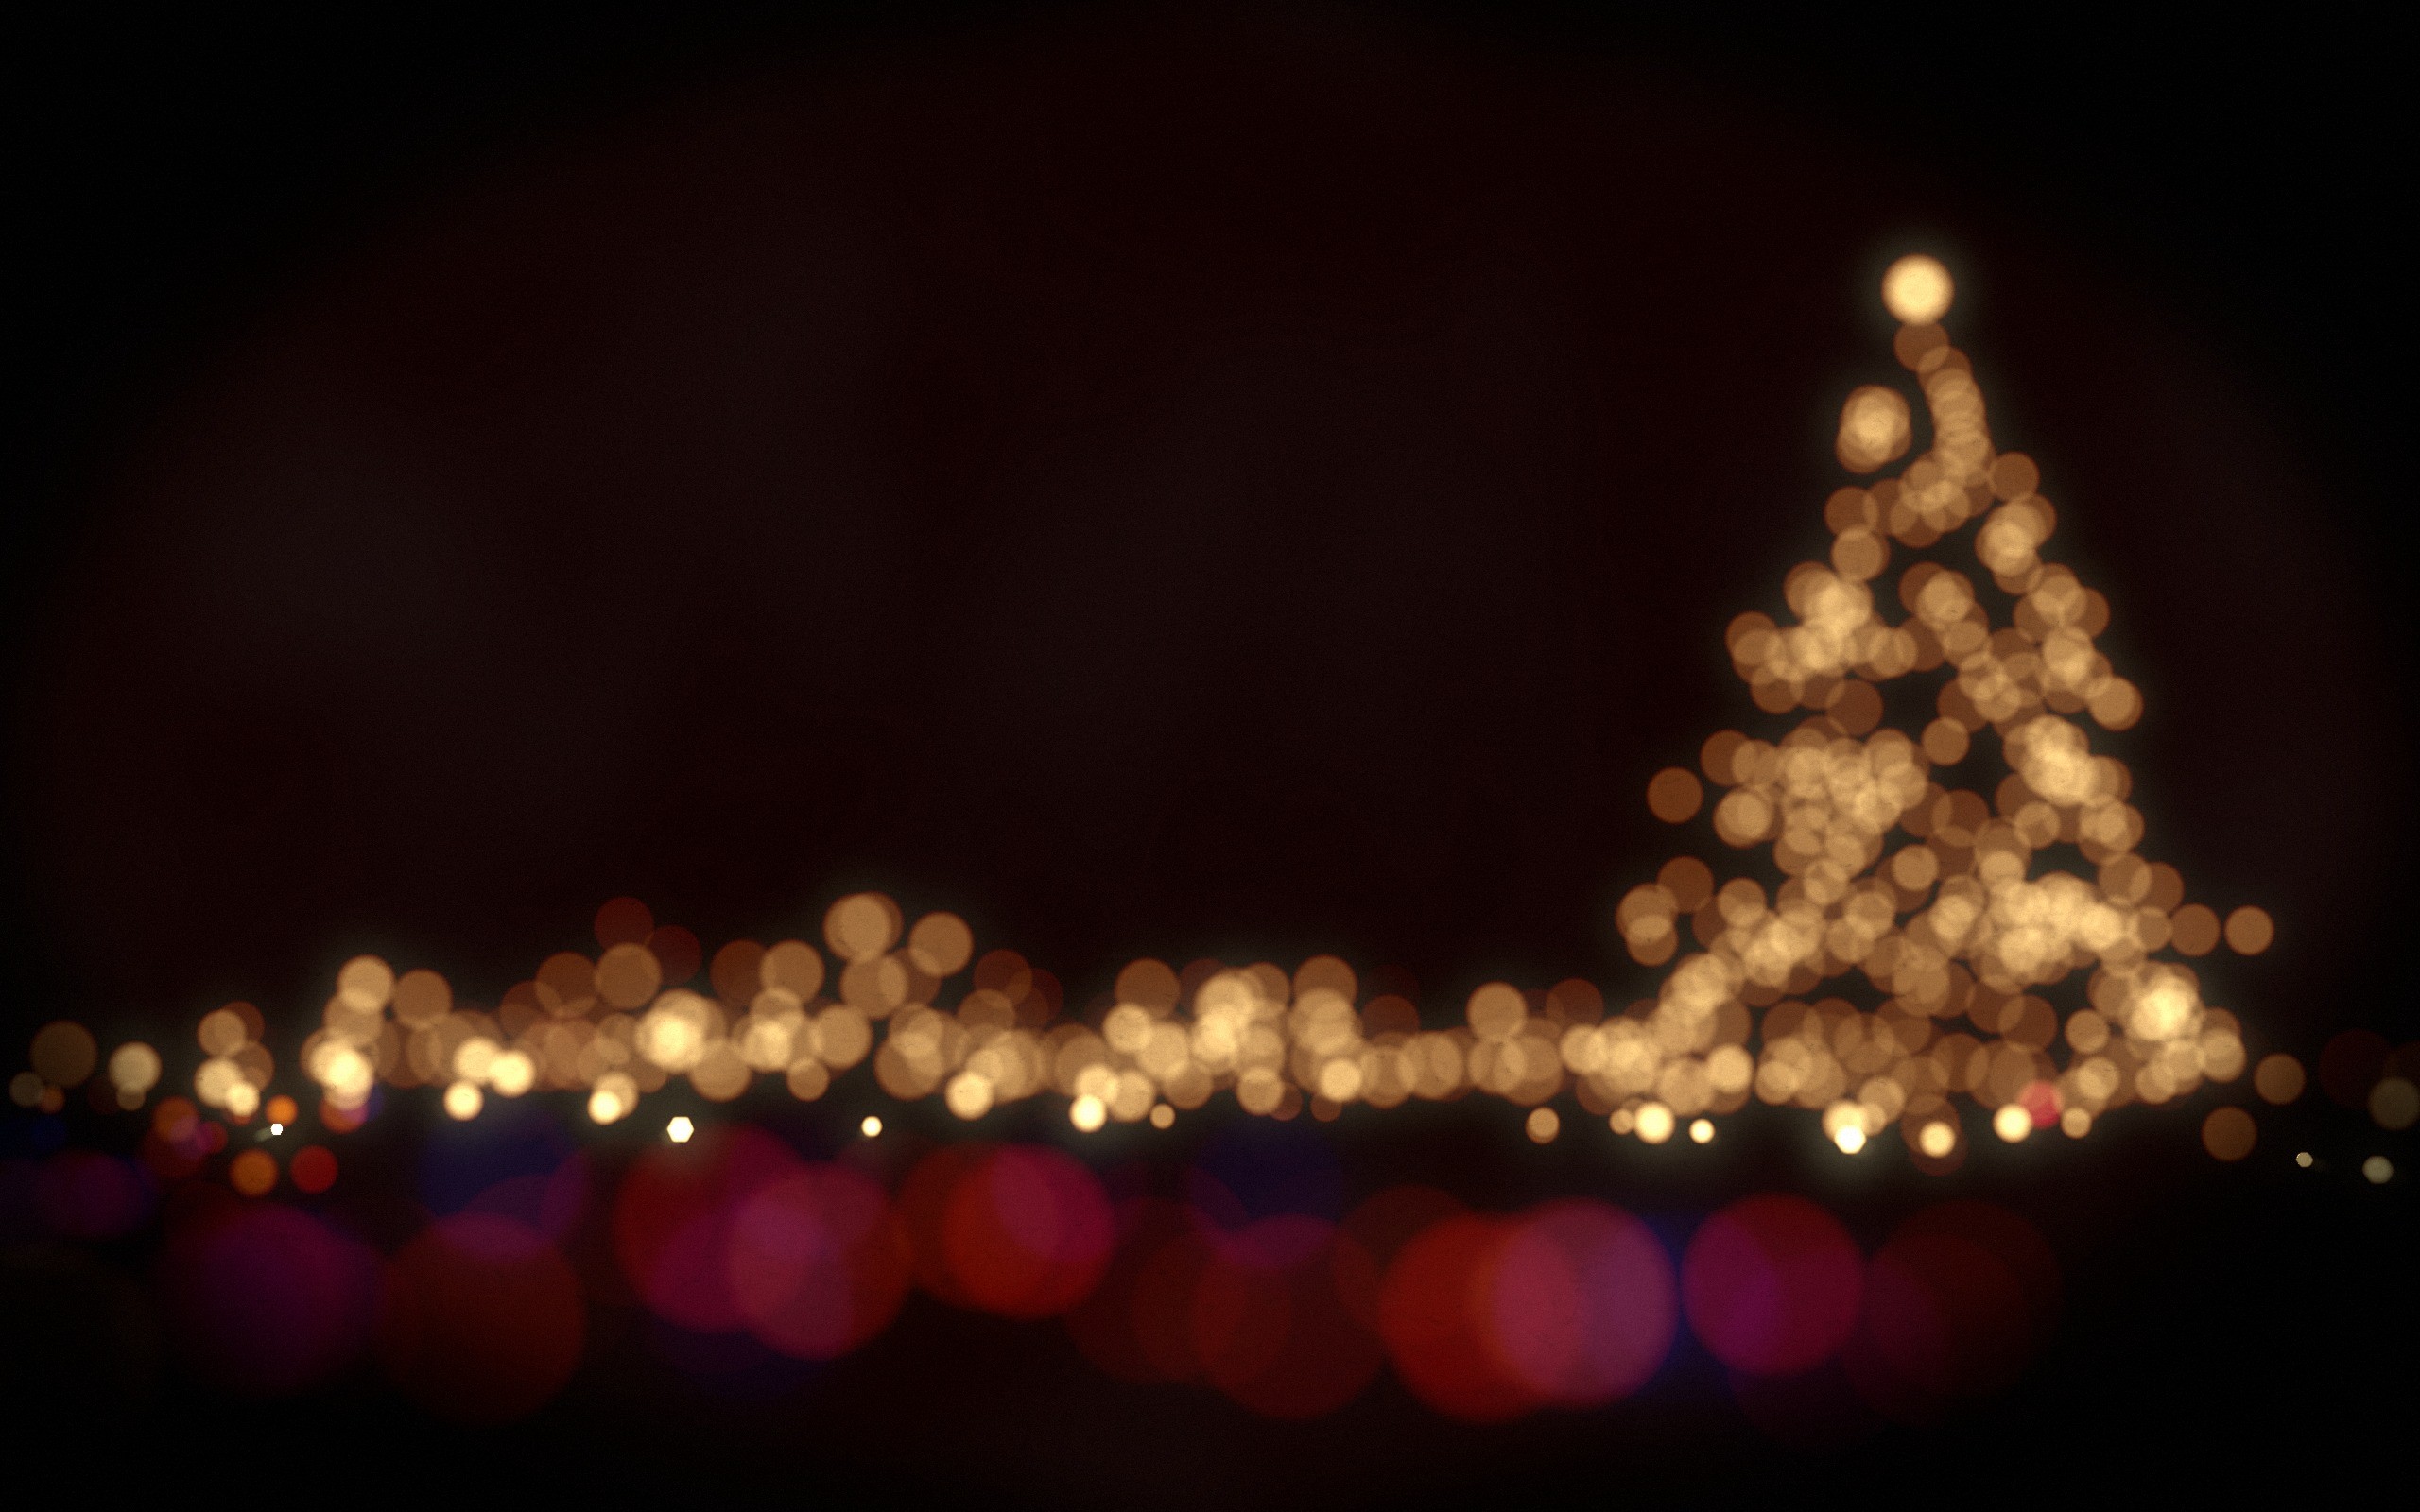 General 2560x1600 blurred Christmas Christmas tree bokeh Christmas lights lights simple background